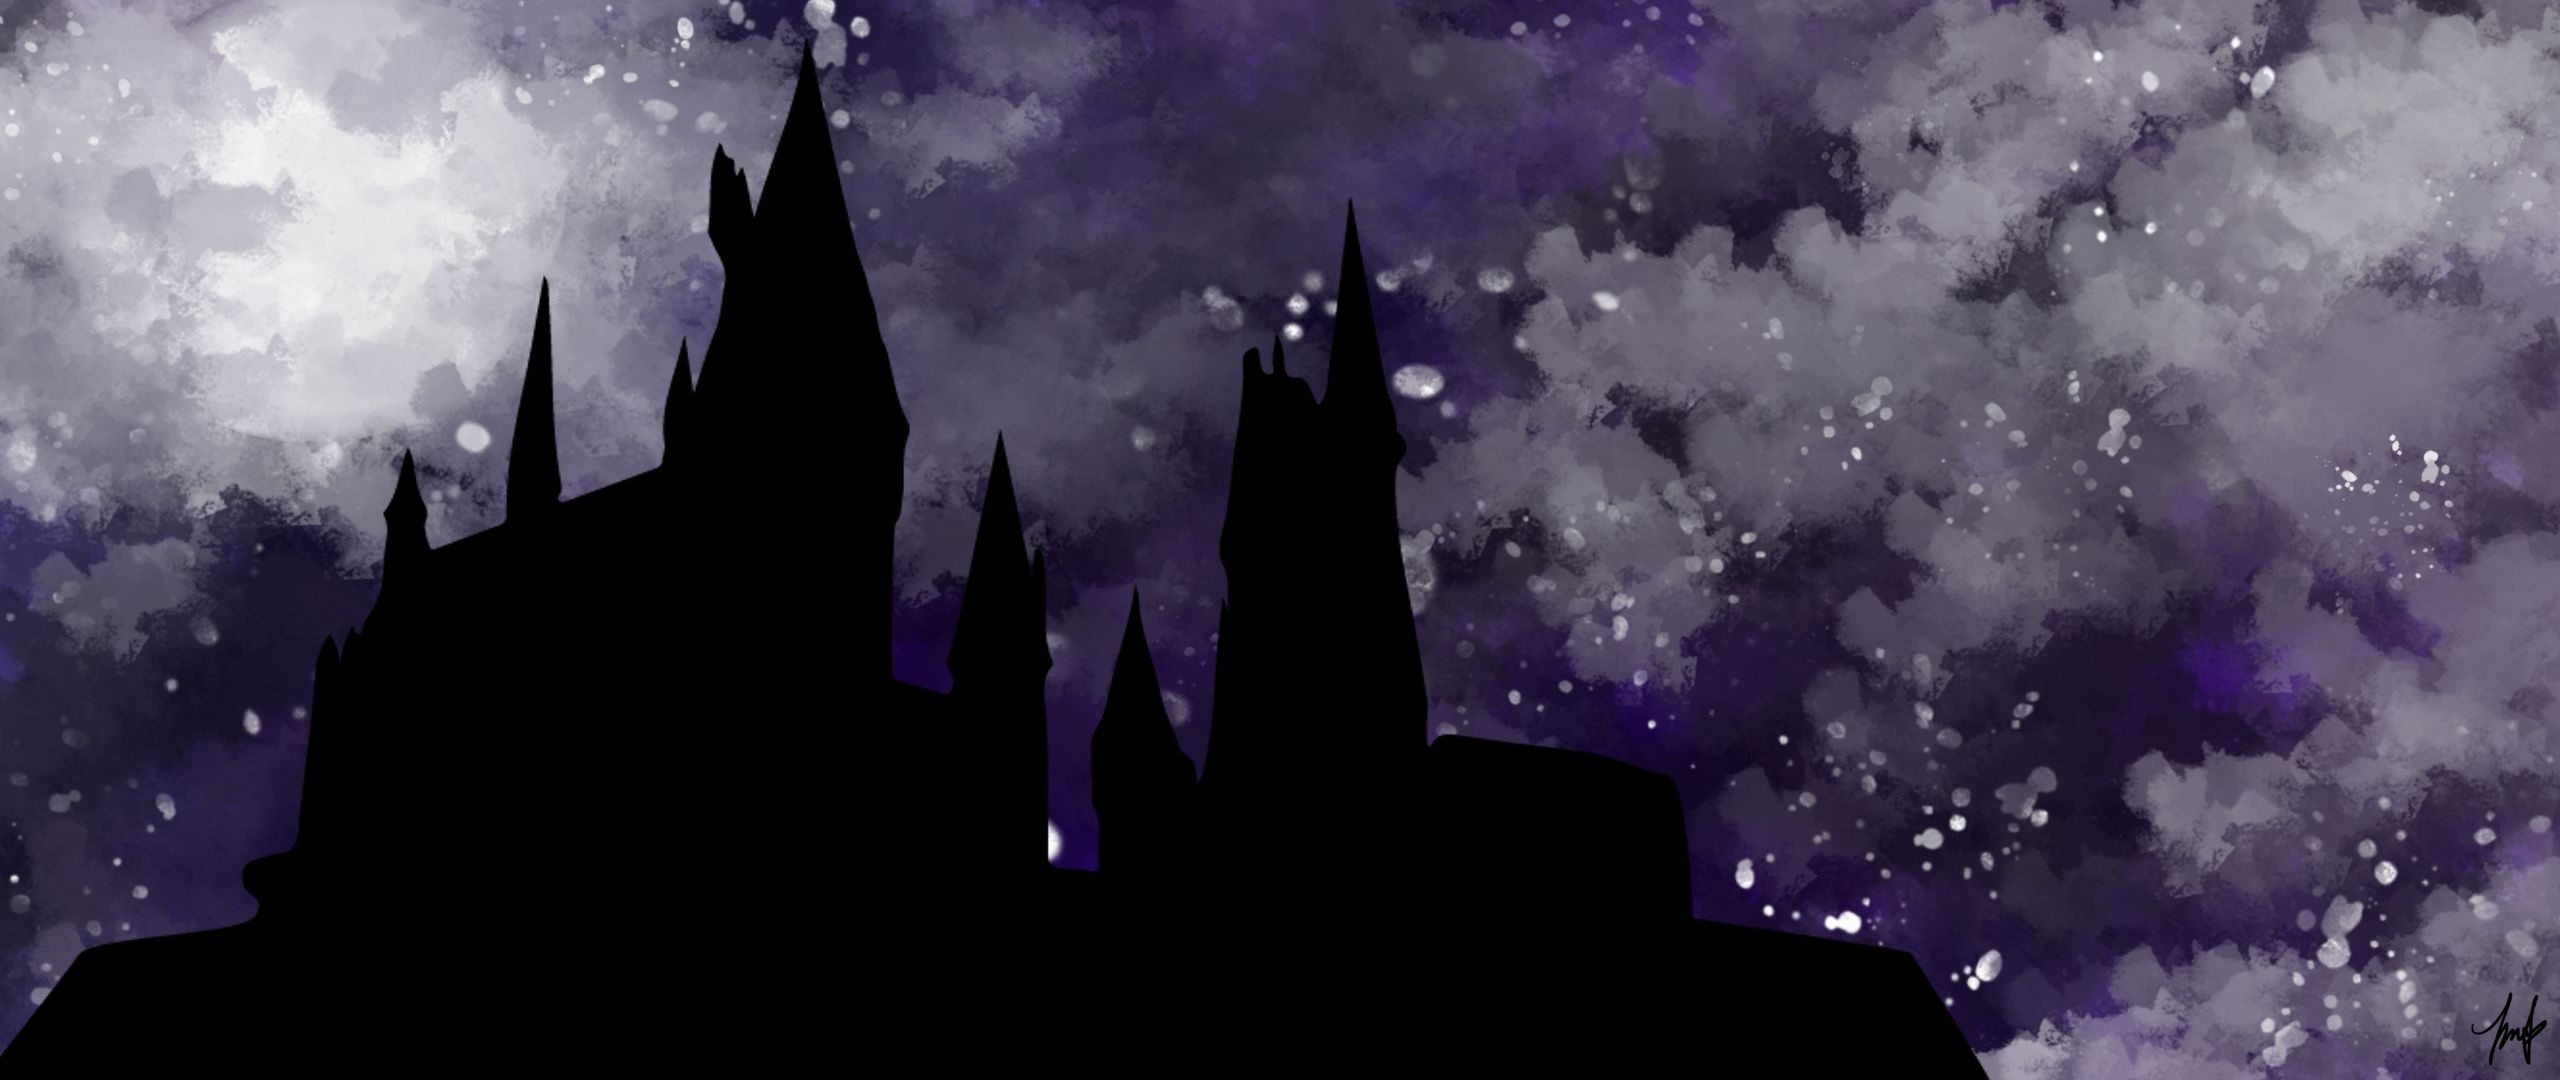 Hogwarts, Desktop wallpaper, Harry Potter theme, 2560x1080 Dual Screen Desktop